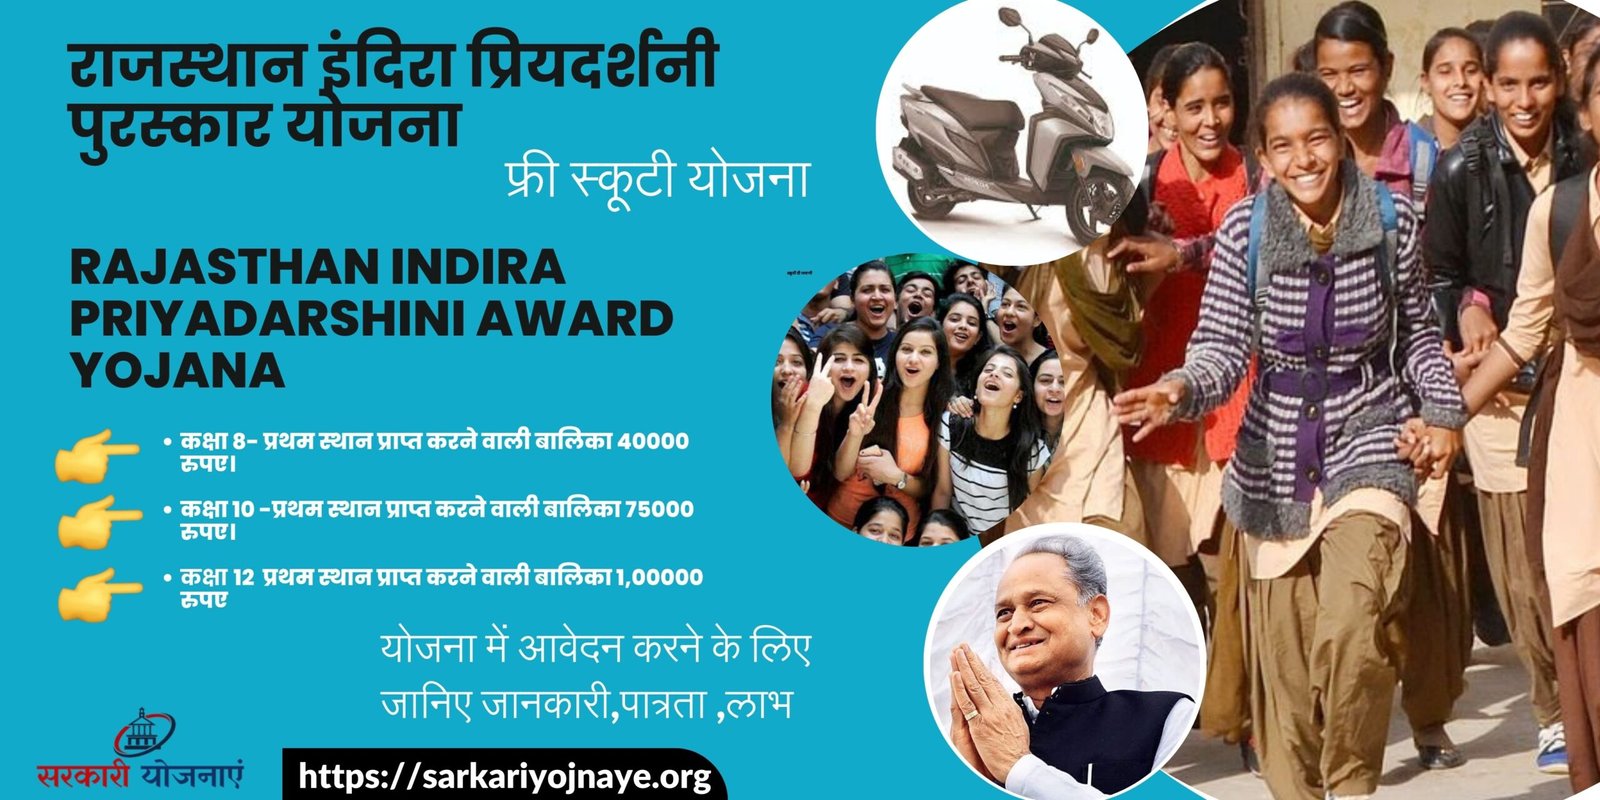 Rajasthan Indira Priyadarshini Award Yojana